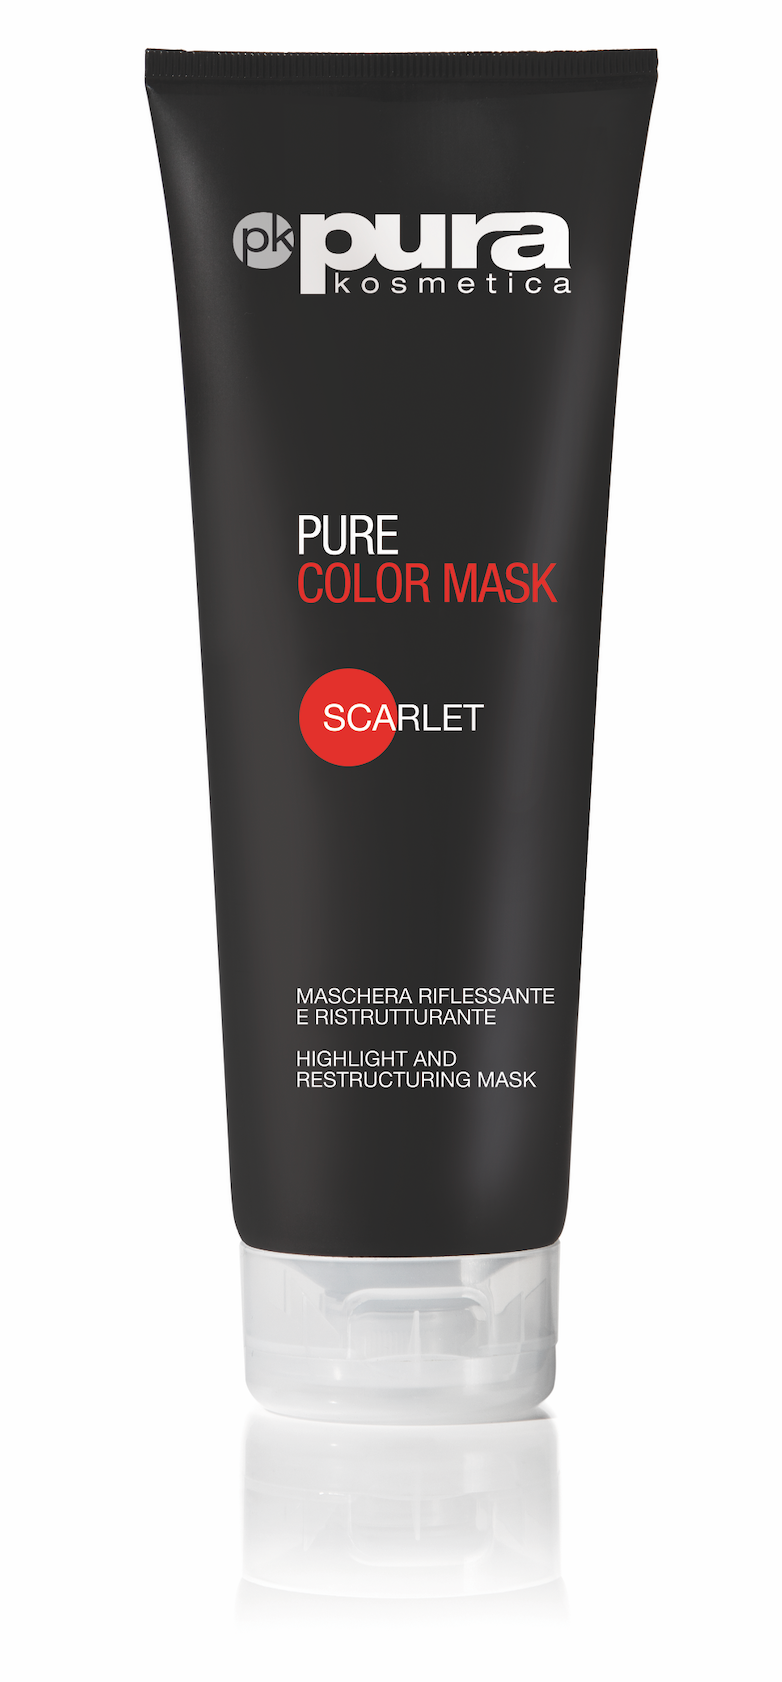 Pura Kosmetica Pure Color Mask Scarlet, 250ml